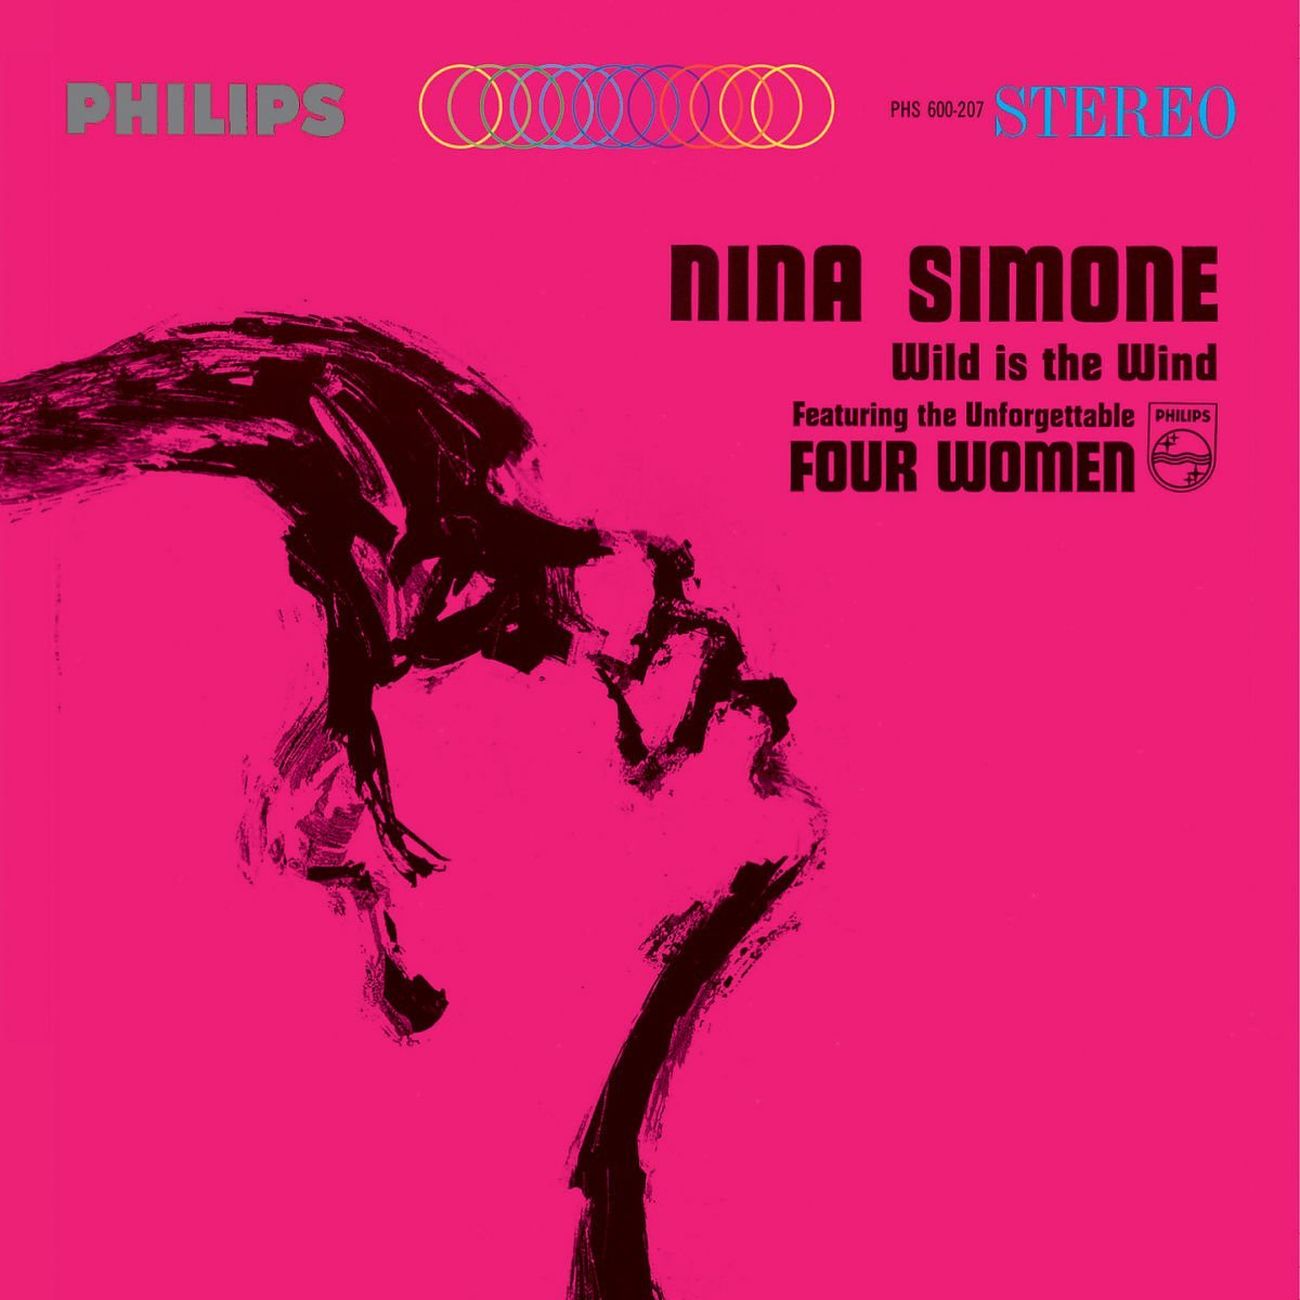 Nina Simone, Wild is the Wind (1966)